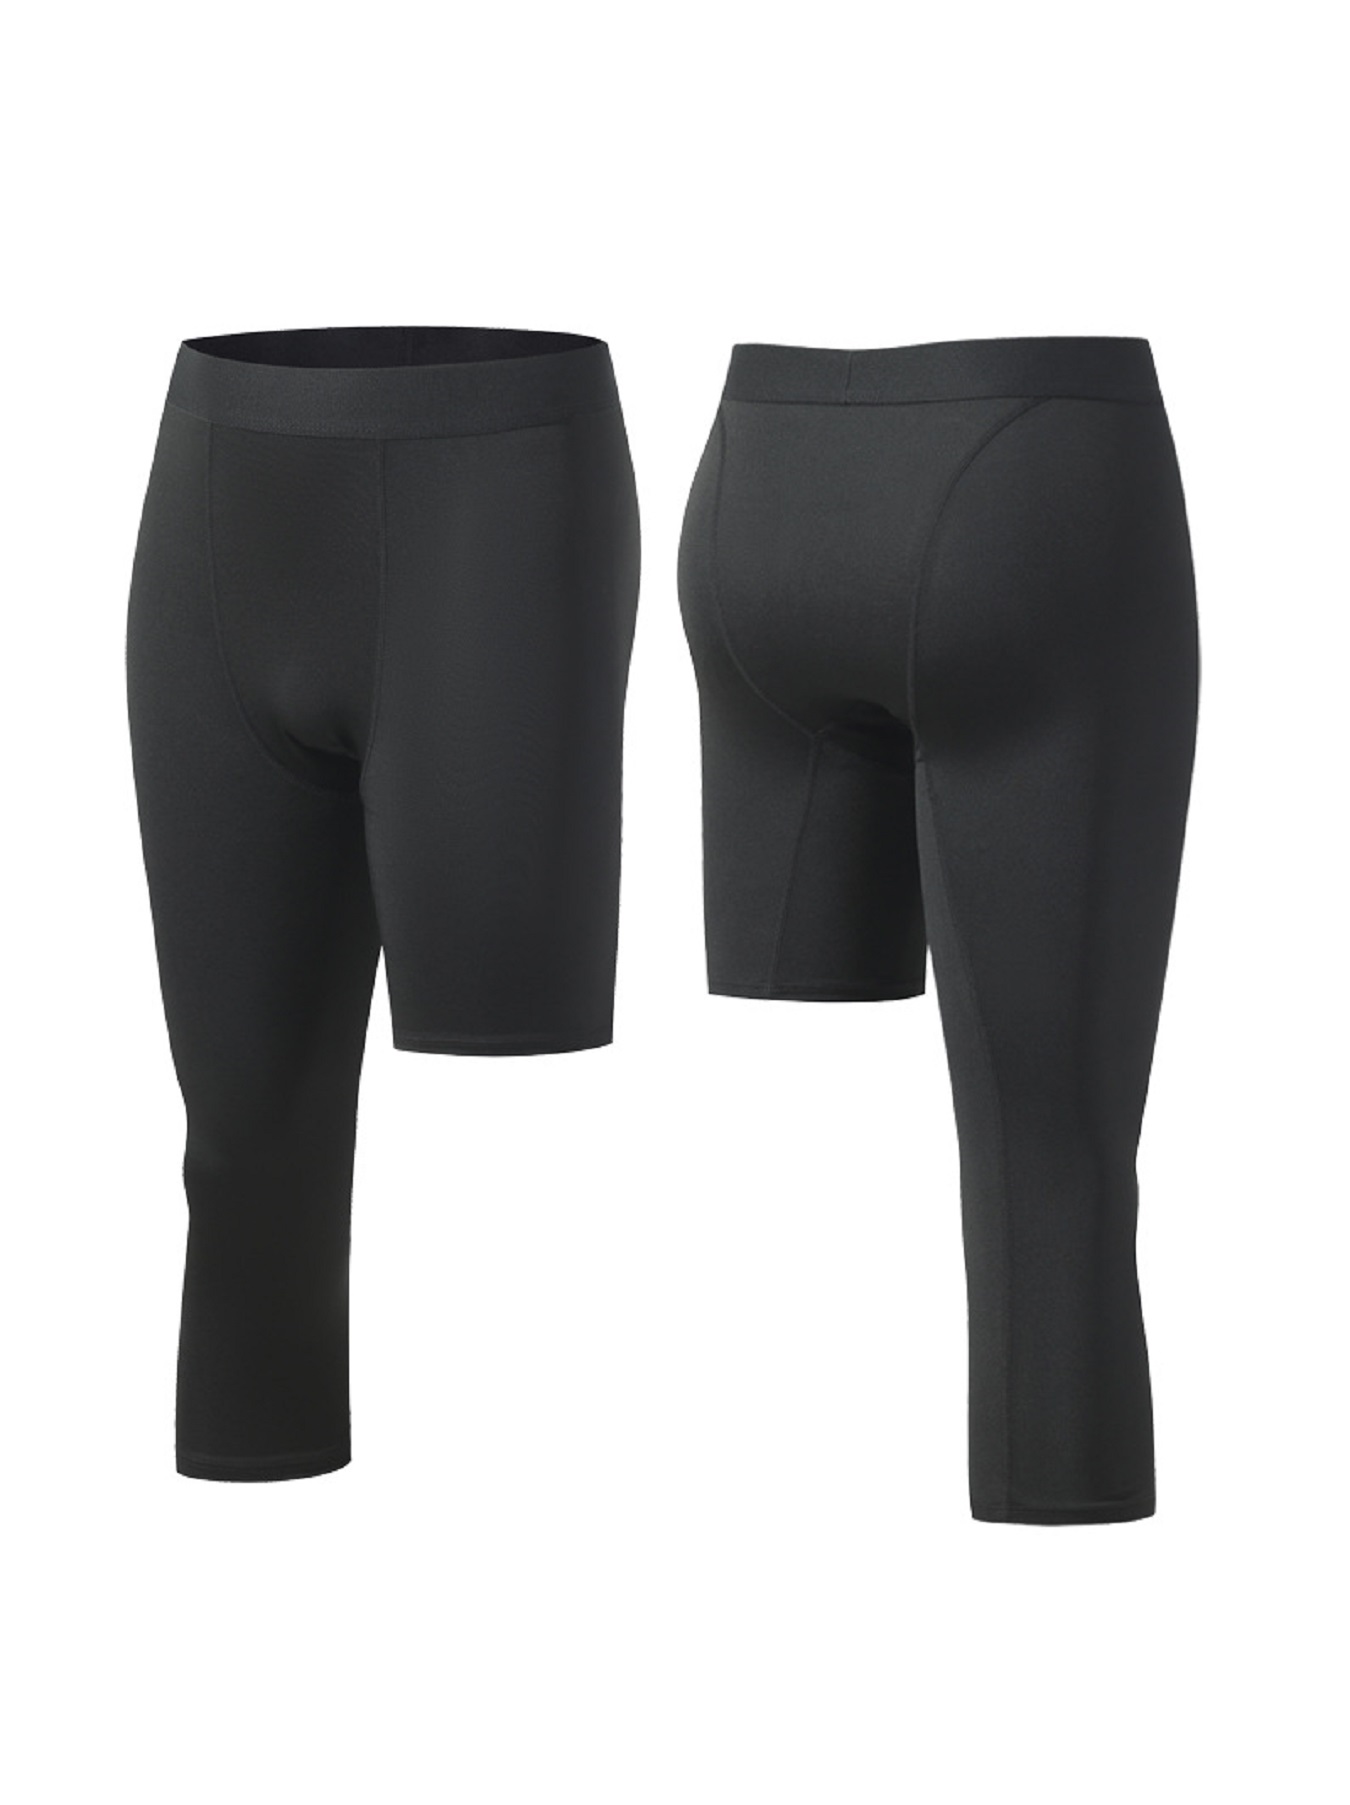  One Leg Compression Pants For Men 3/4 Length Capri Running  Tights Leggings Workout Athletic Base Layer For Basketball Black